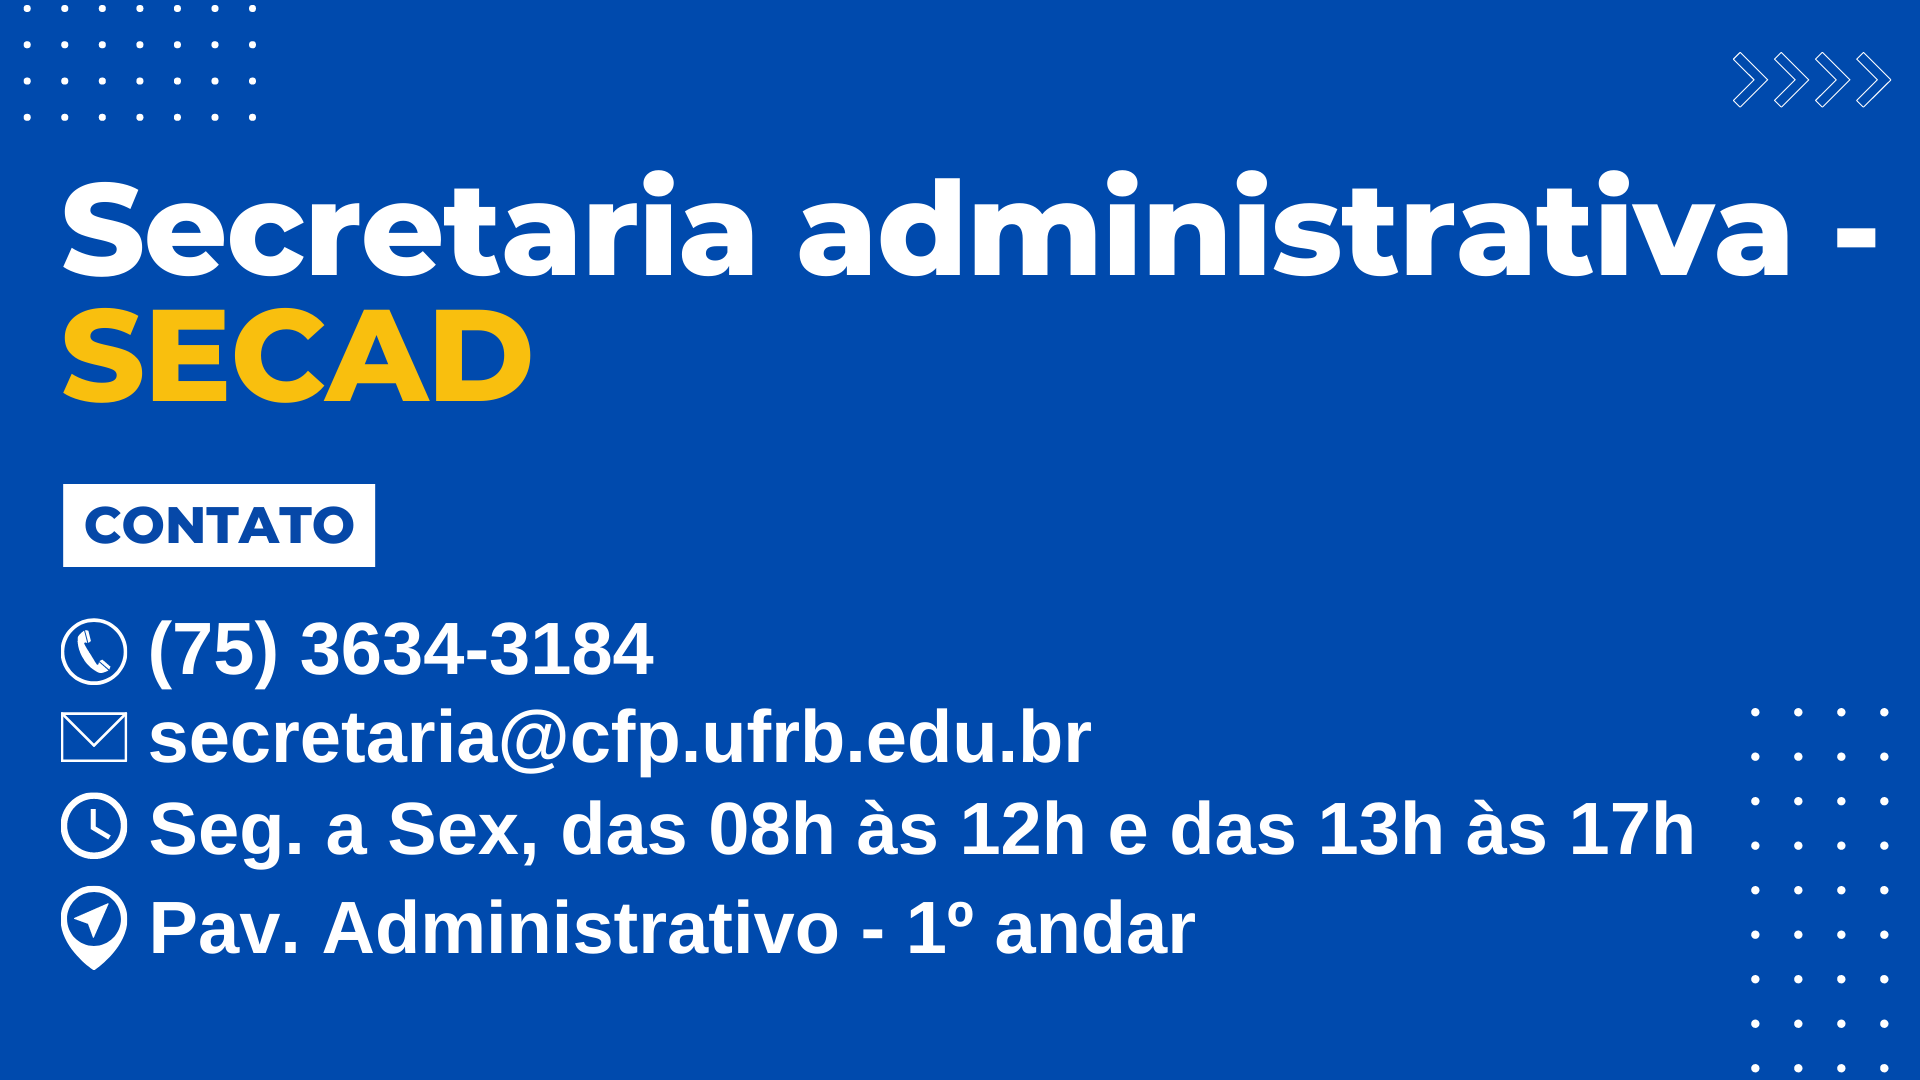 Secretaria administrativa - SECAD